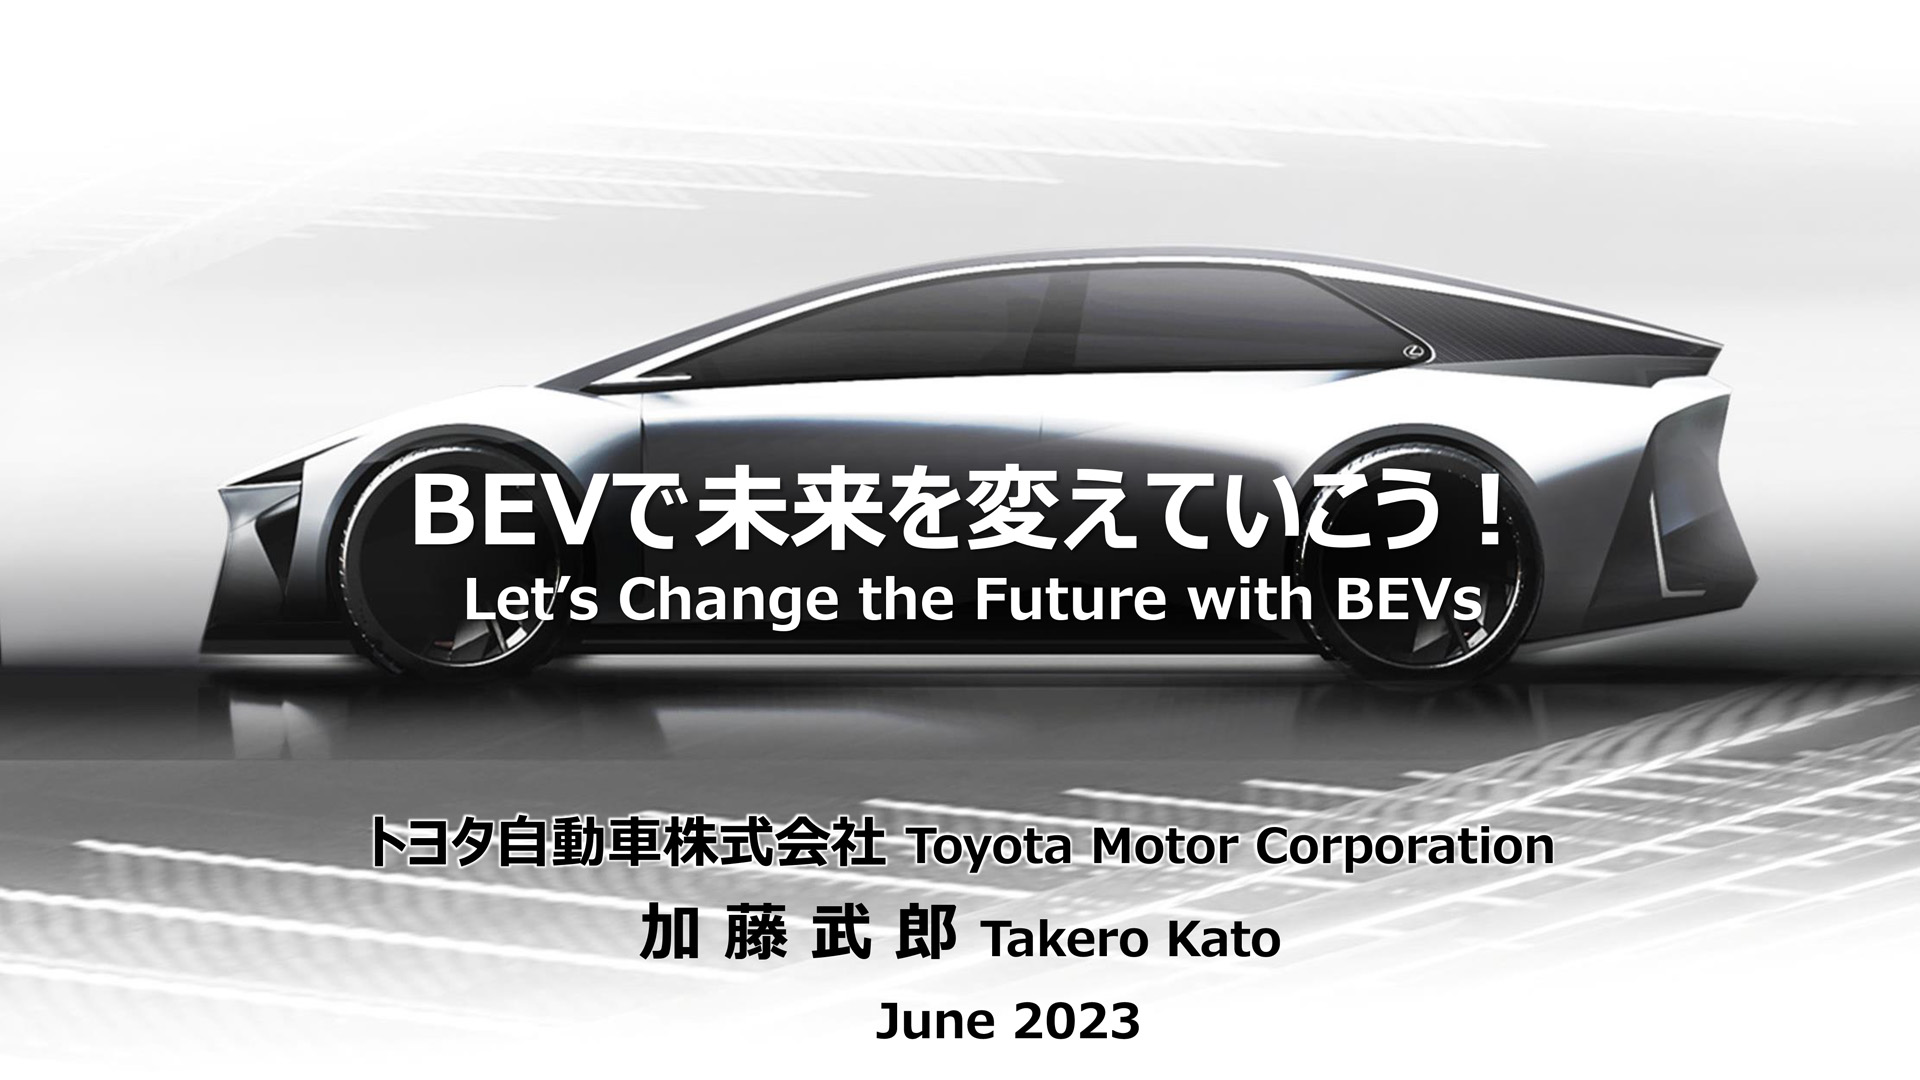 BEV Factory (President) Takero Kato